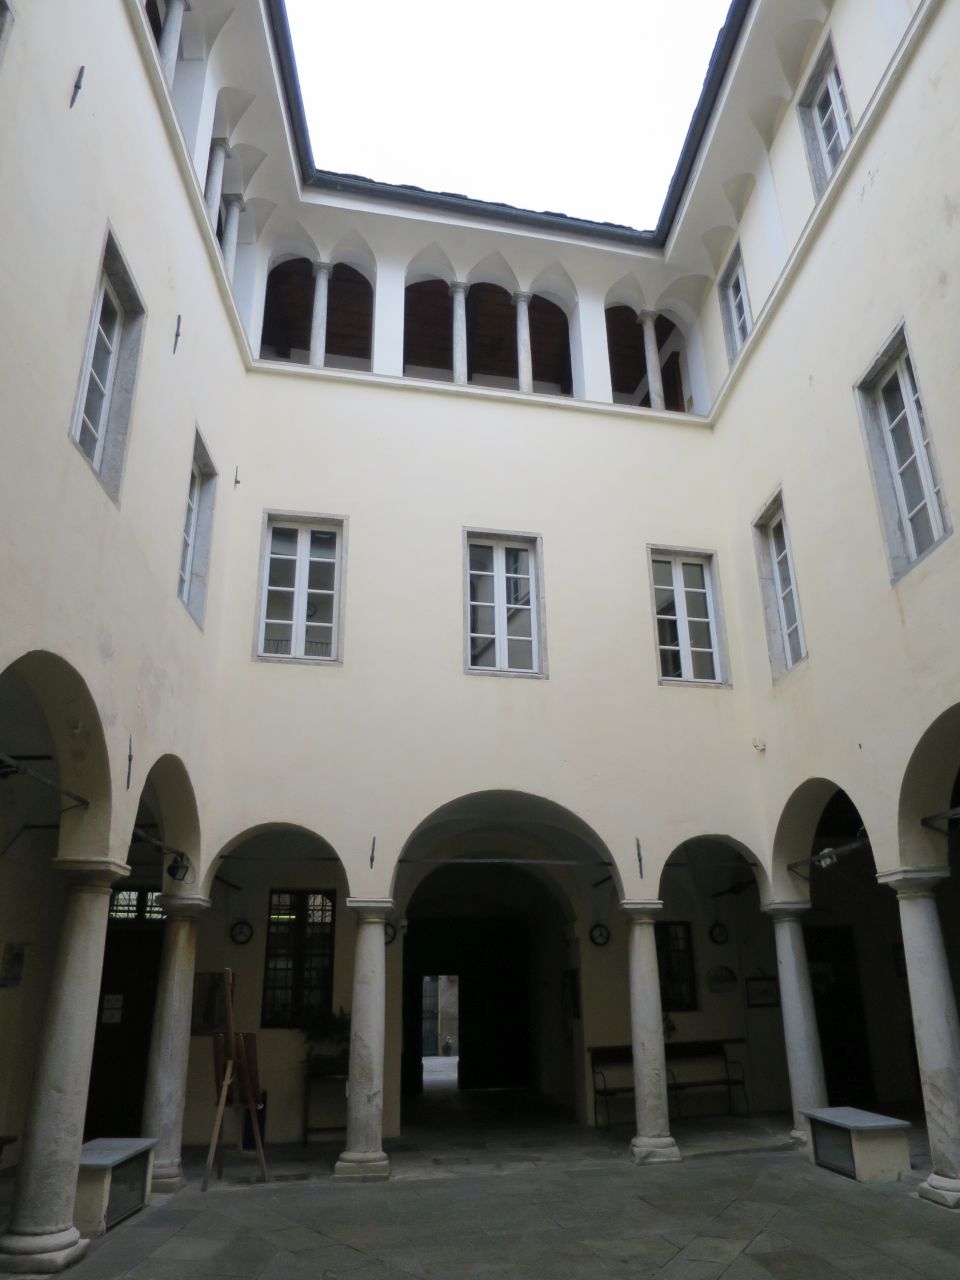 Palazzo Rachetti, ora Archivio di Stato (palazzo) - Varallo (VC)  (XVII, inizio; XVII; XVIII; XVIII; XX; XX)